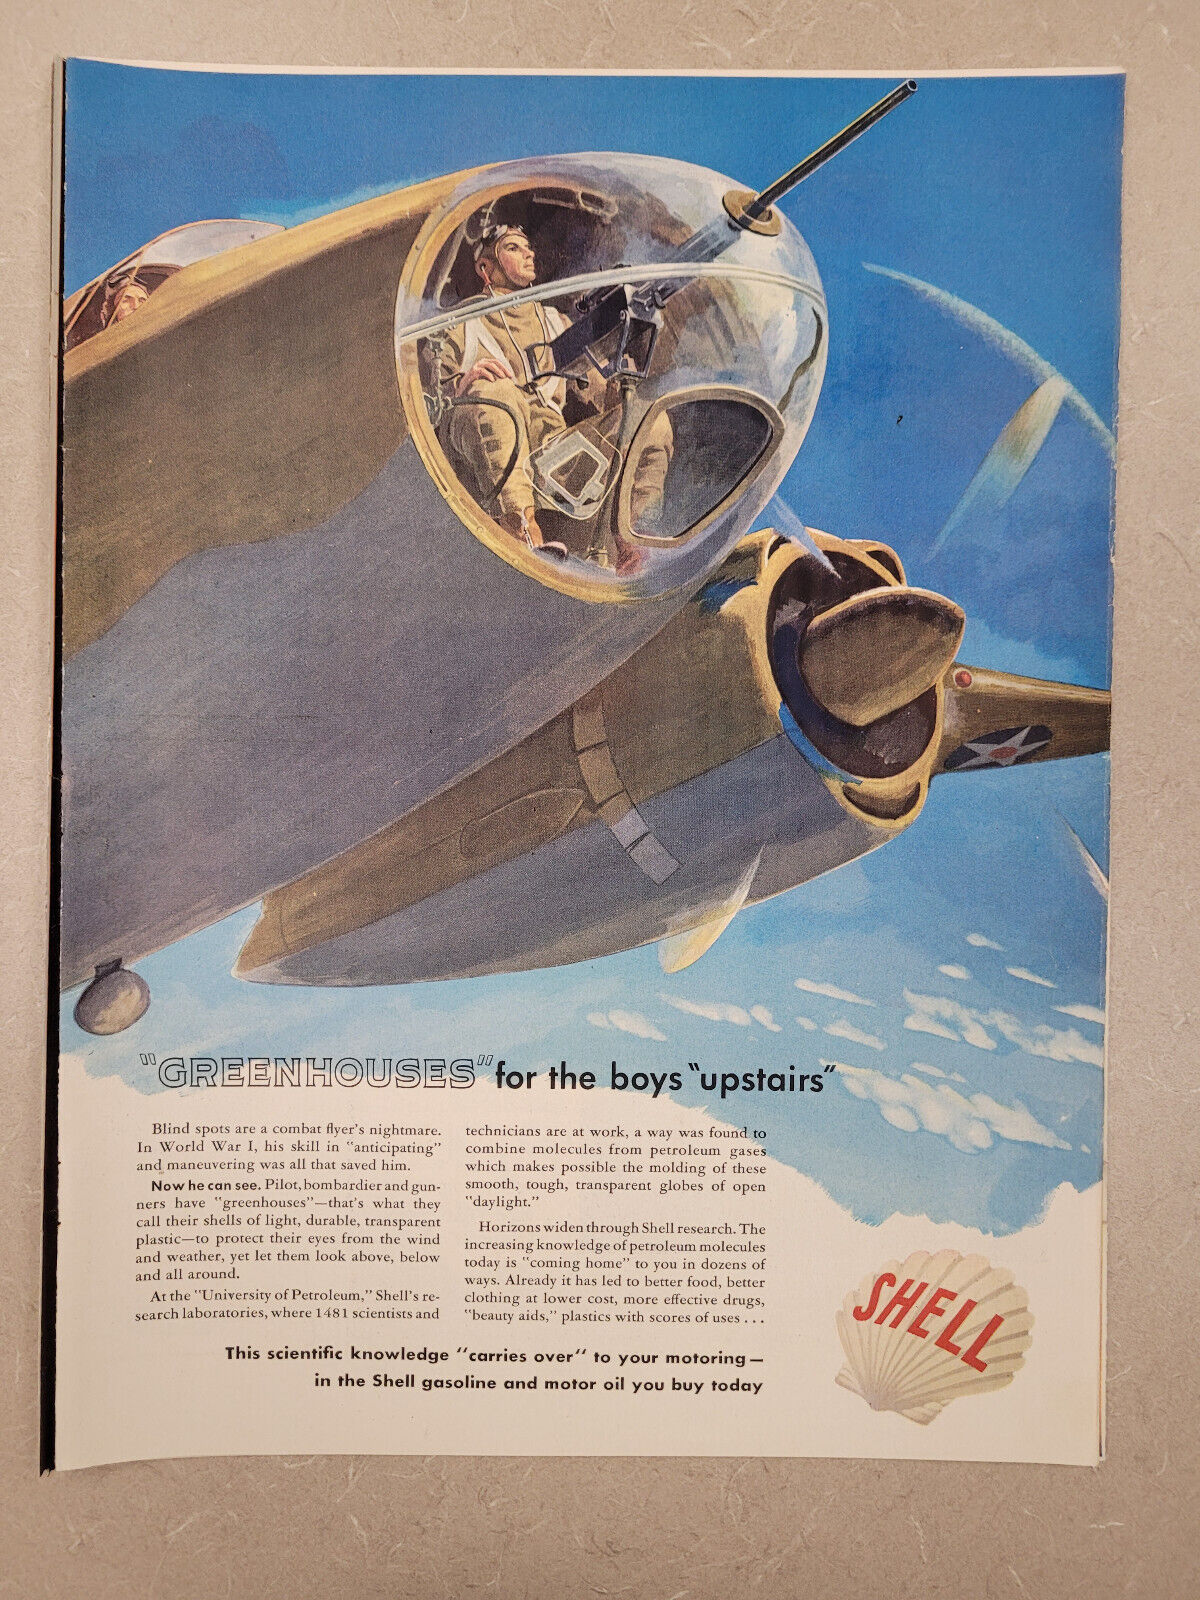 VTG 1942 Original Magazine Ad Shell Gas Gasoline Greenhouses For Boys Upstairs